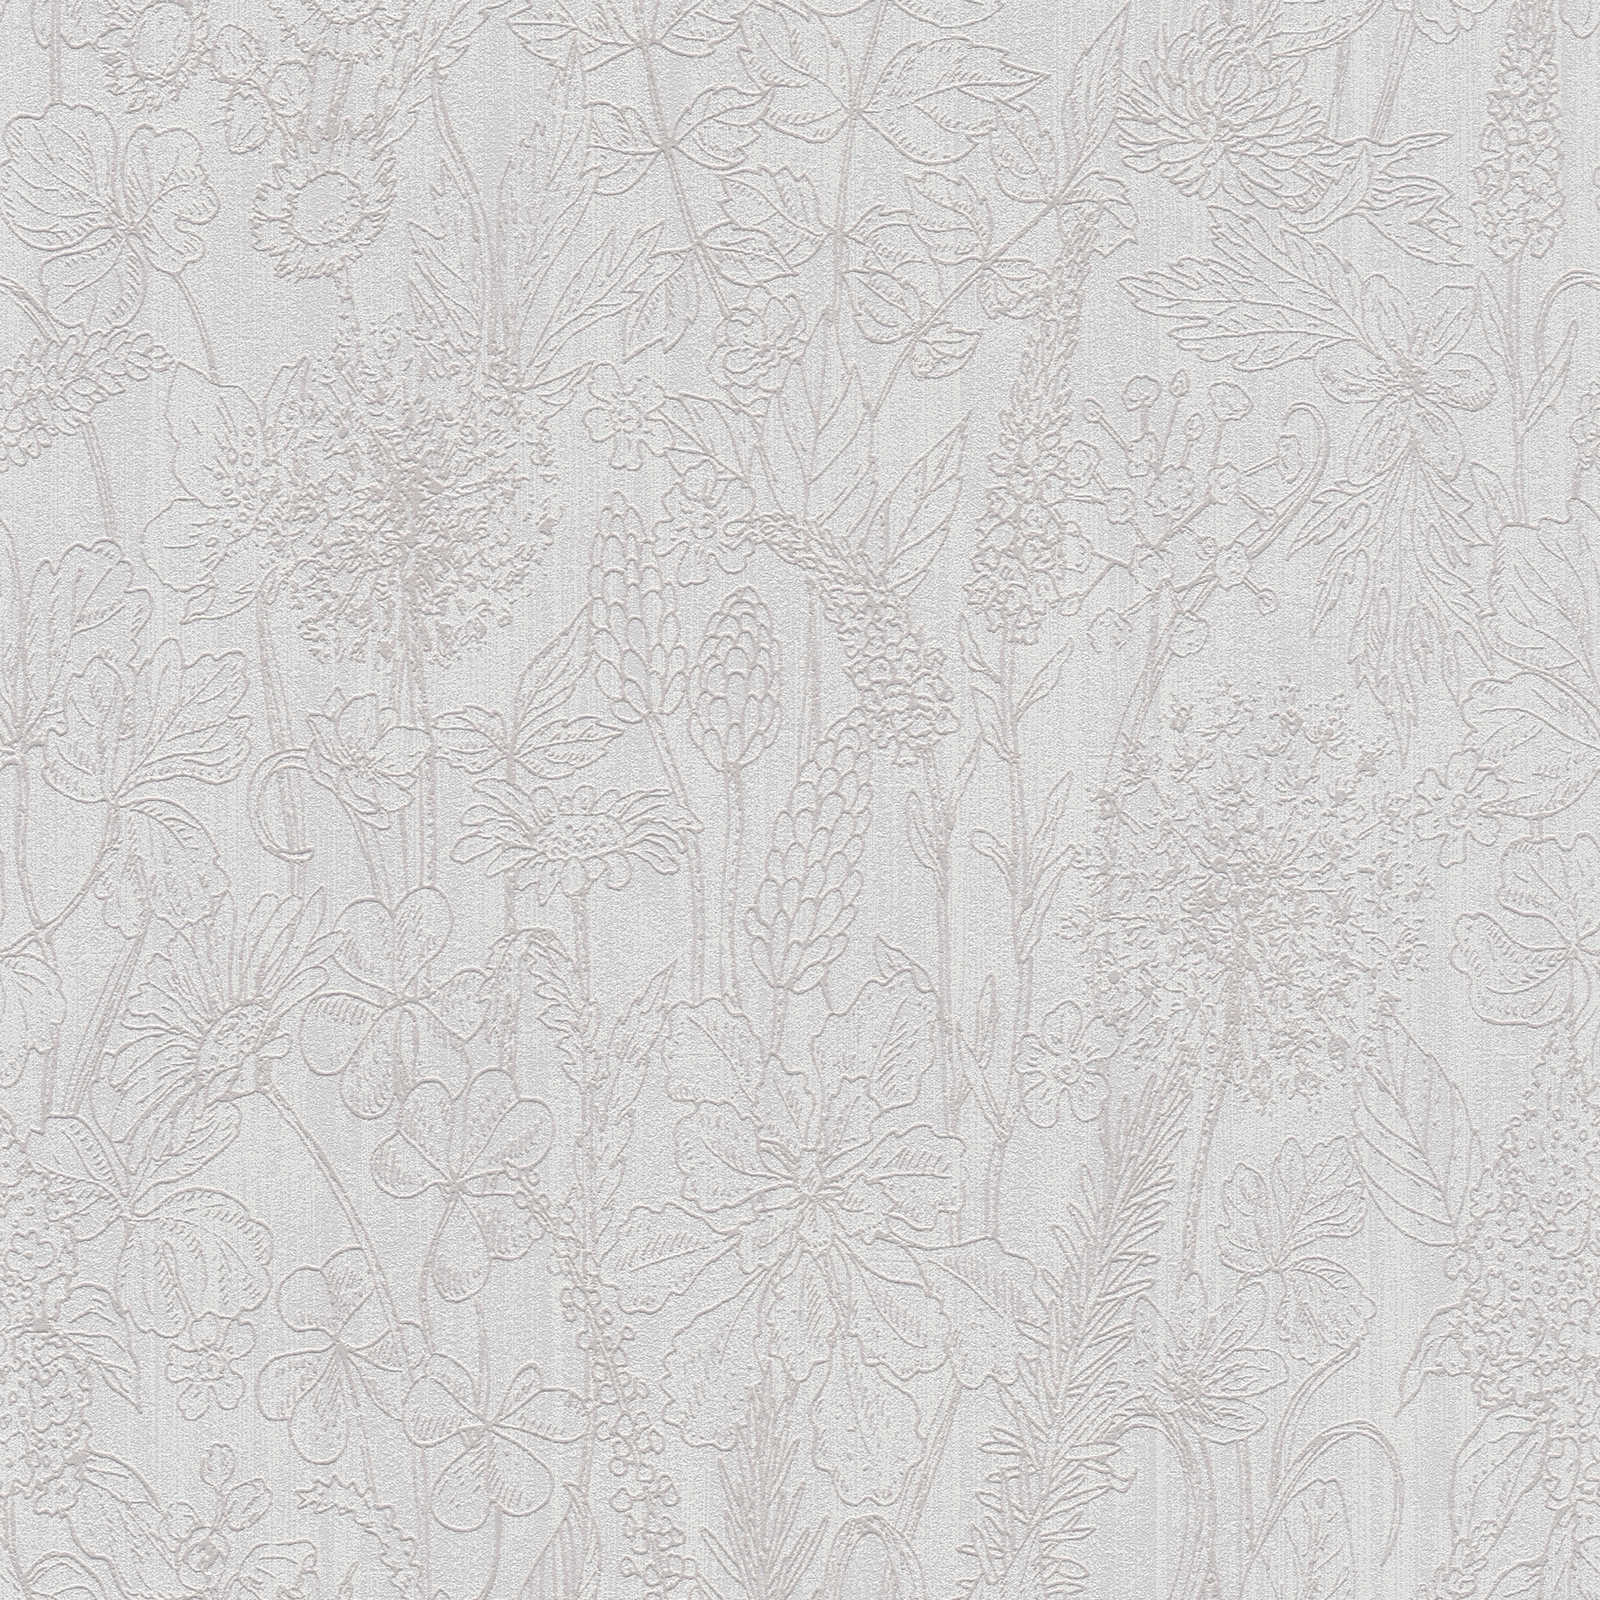 Papel pintado floral de estilo botánico con aspecto de lino - beige
